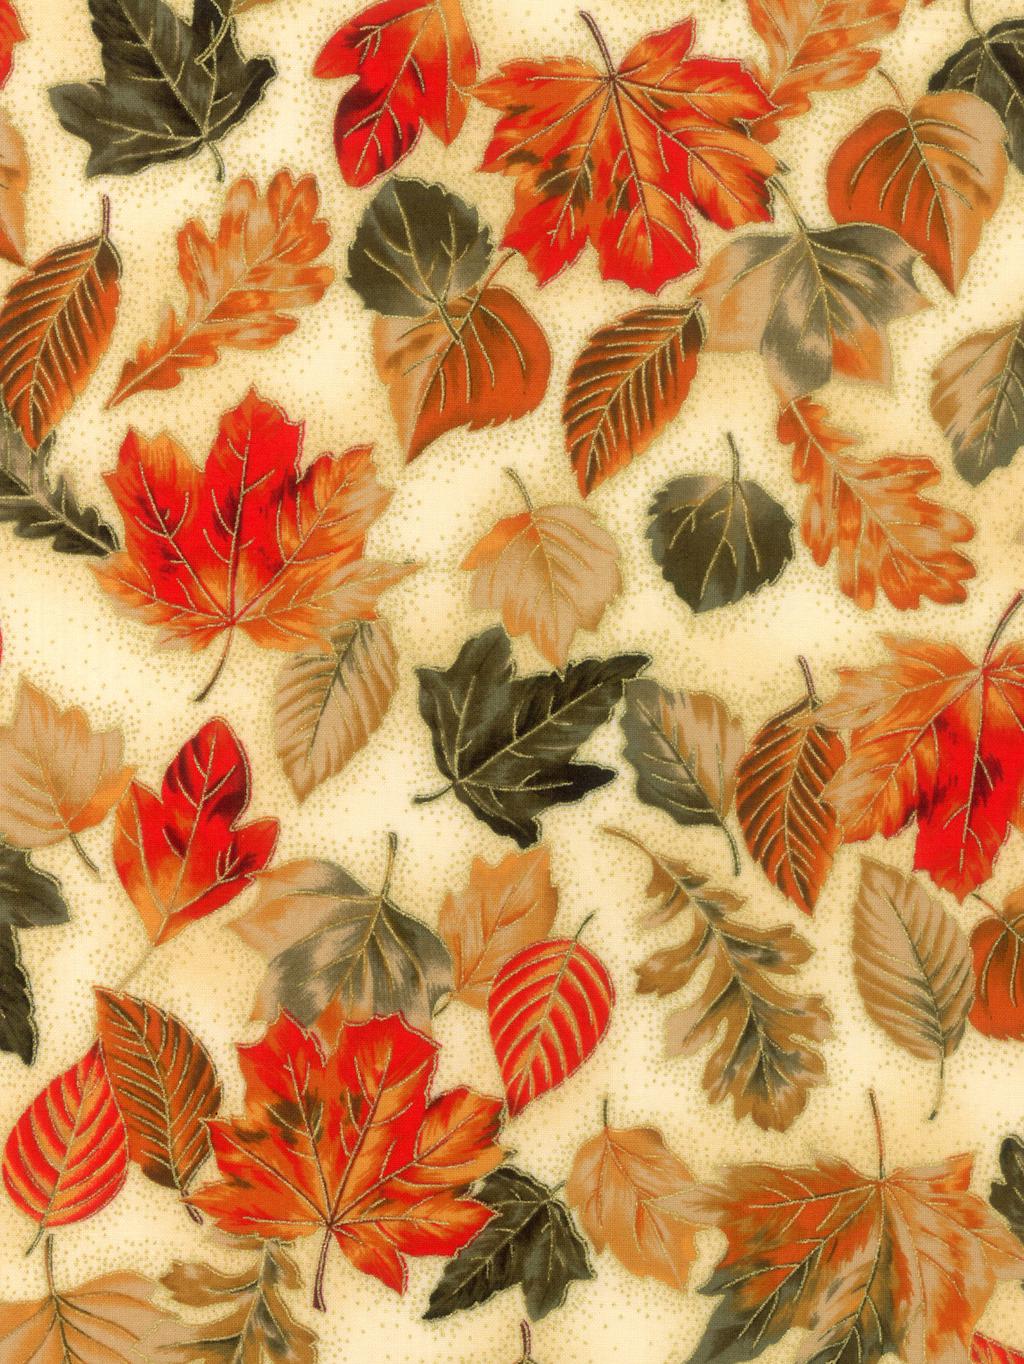 Autumn s Song Quilt design by Daniela